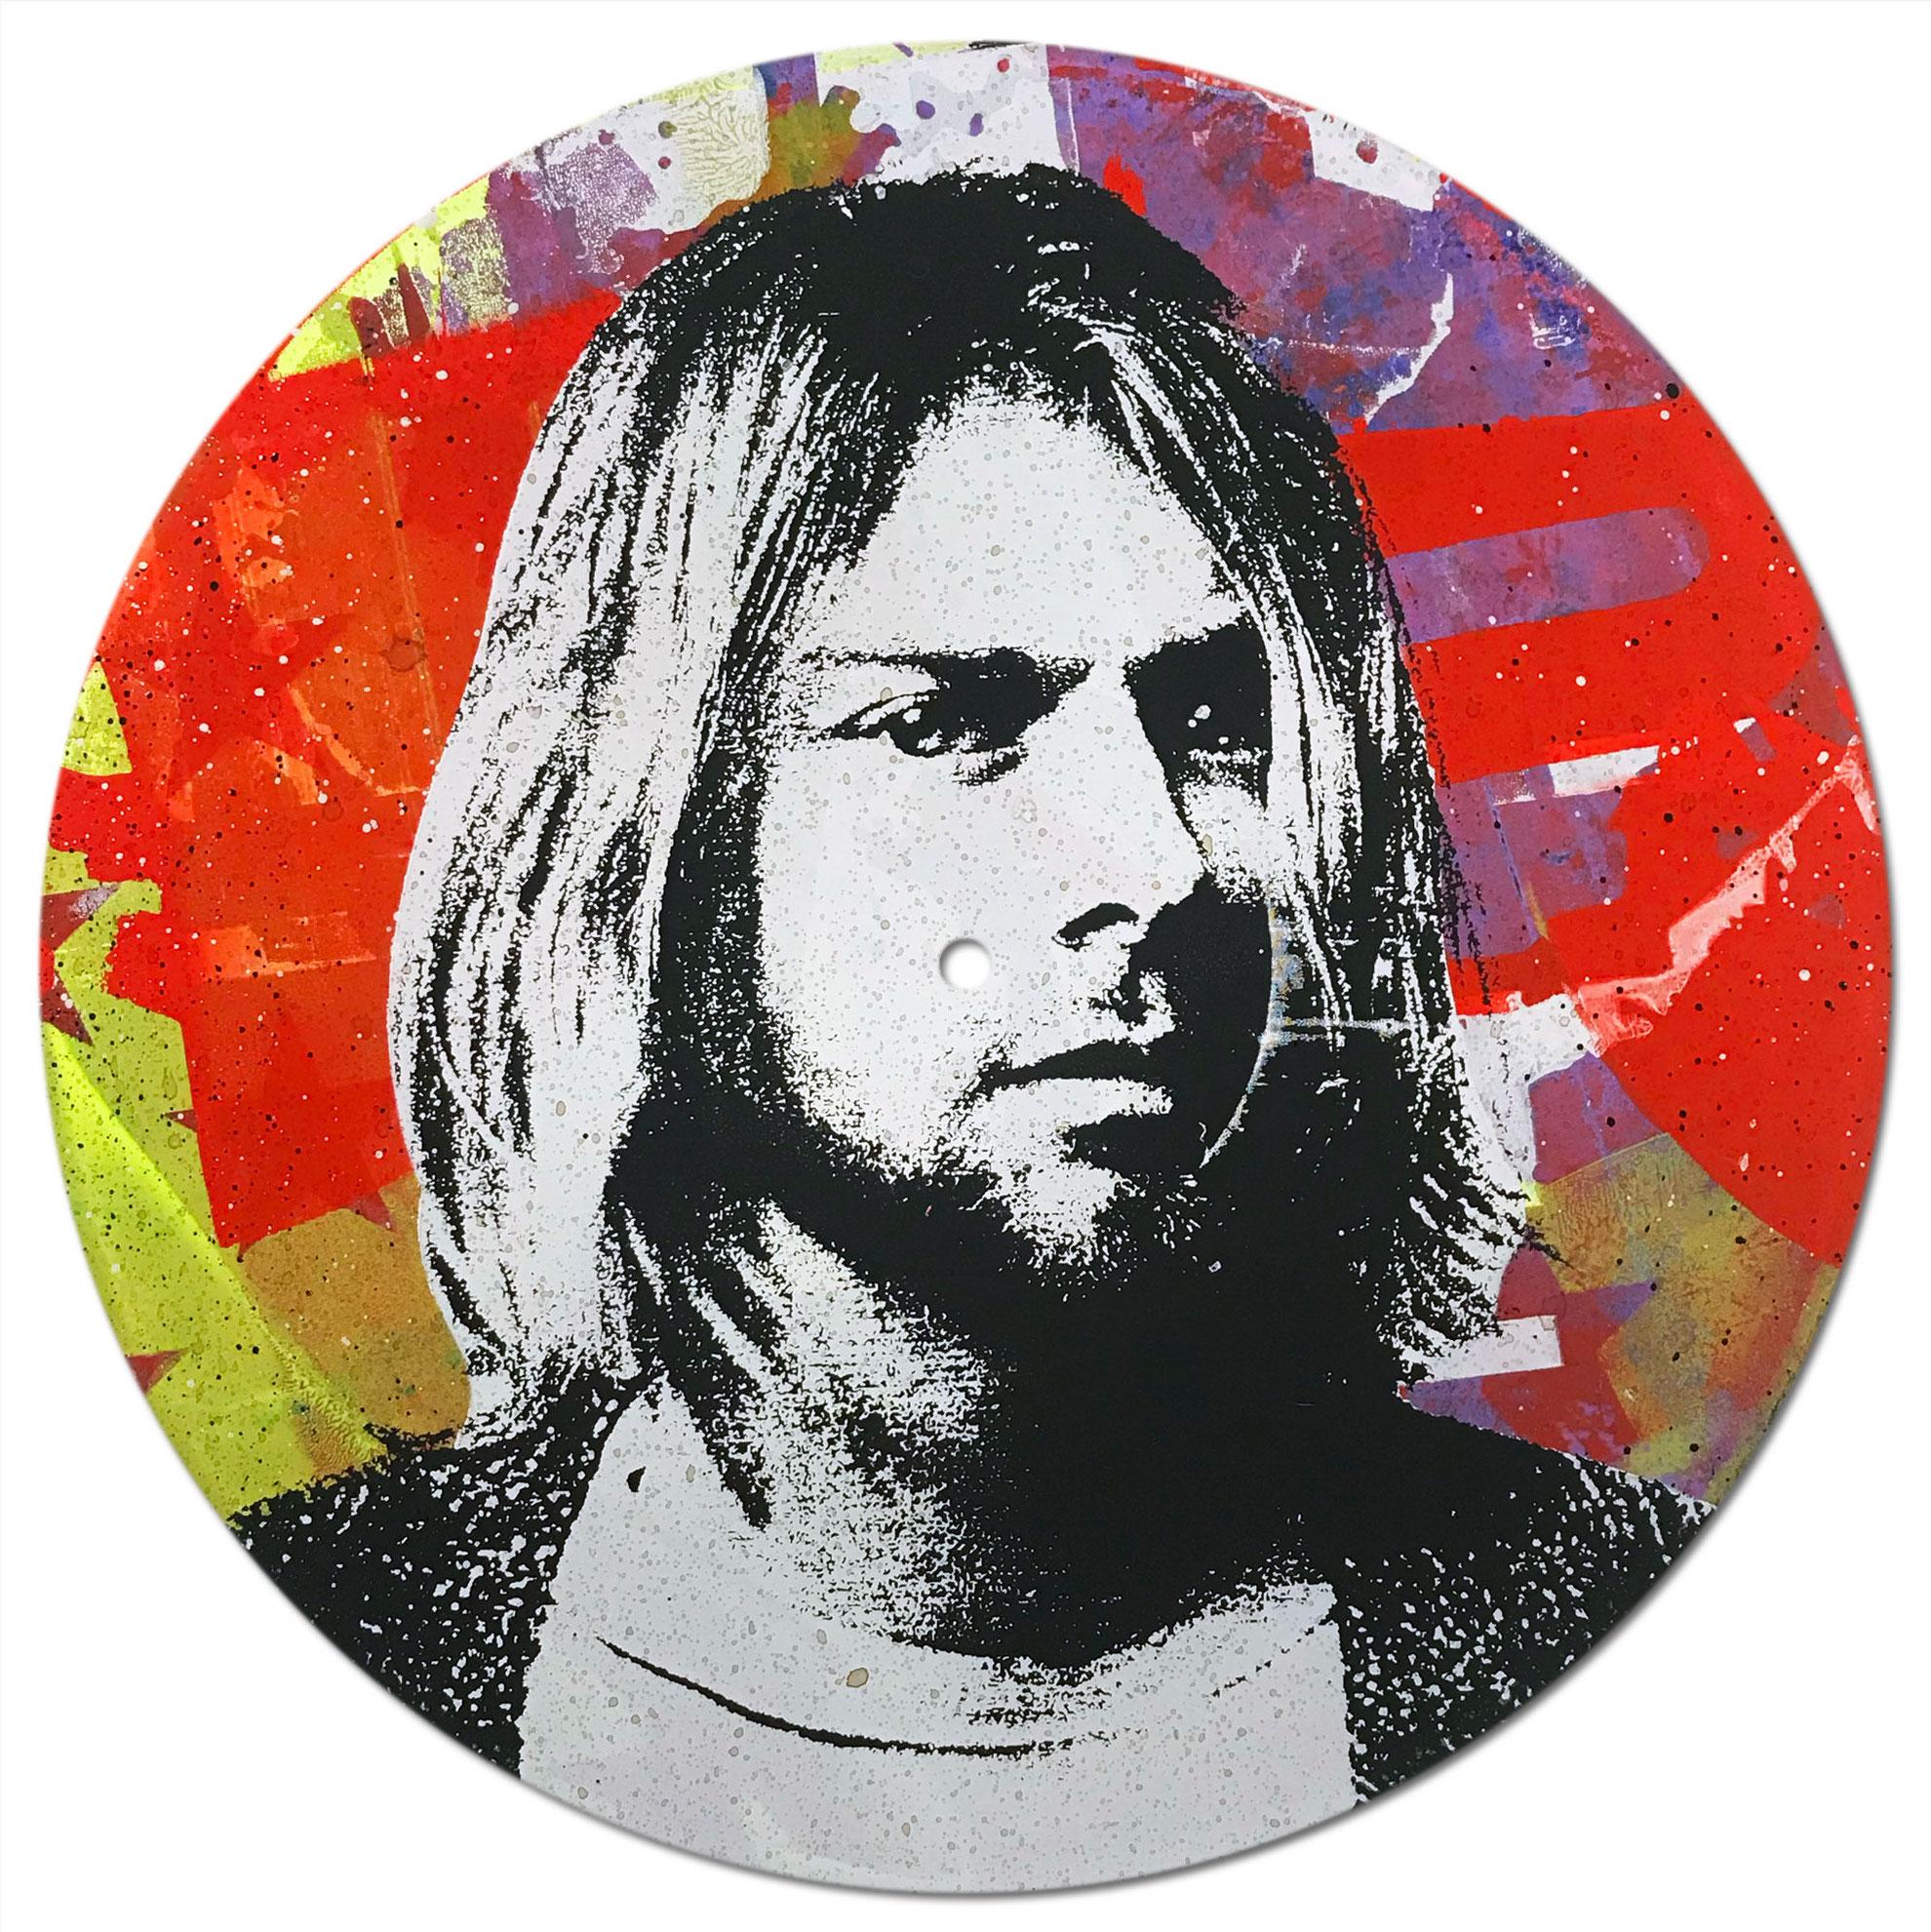 Kurt Cobain Vinyl 1-10, Greg Gossel Pop Art LP Record (Singles & Sets Available) For Sale 6